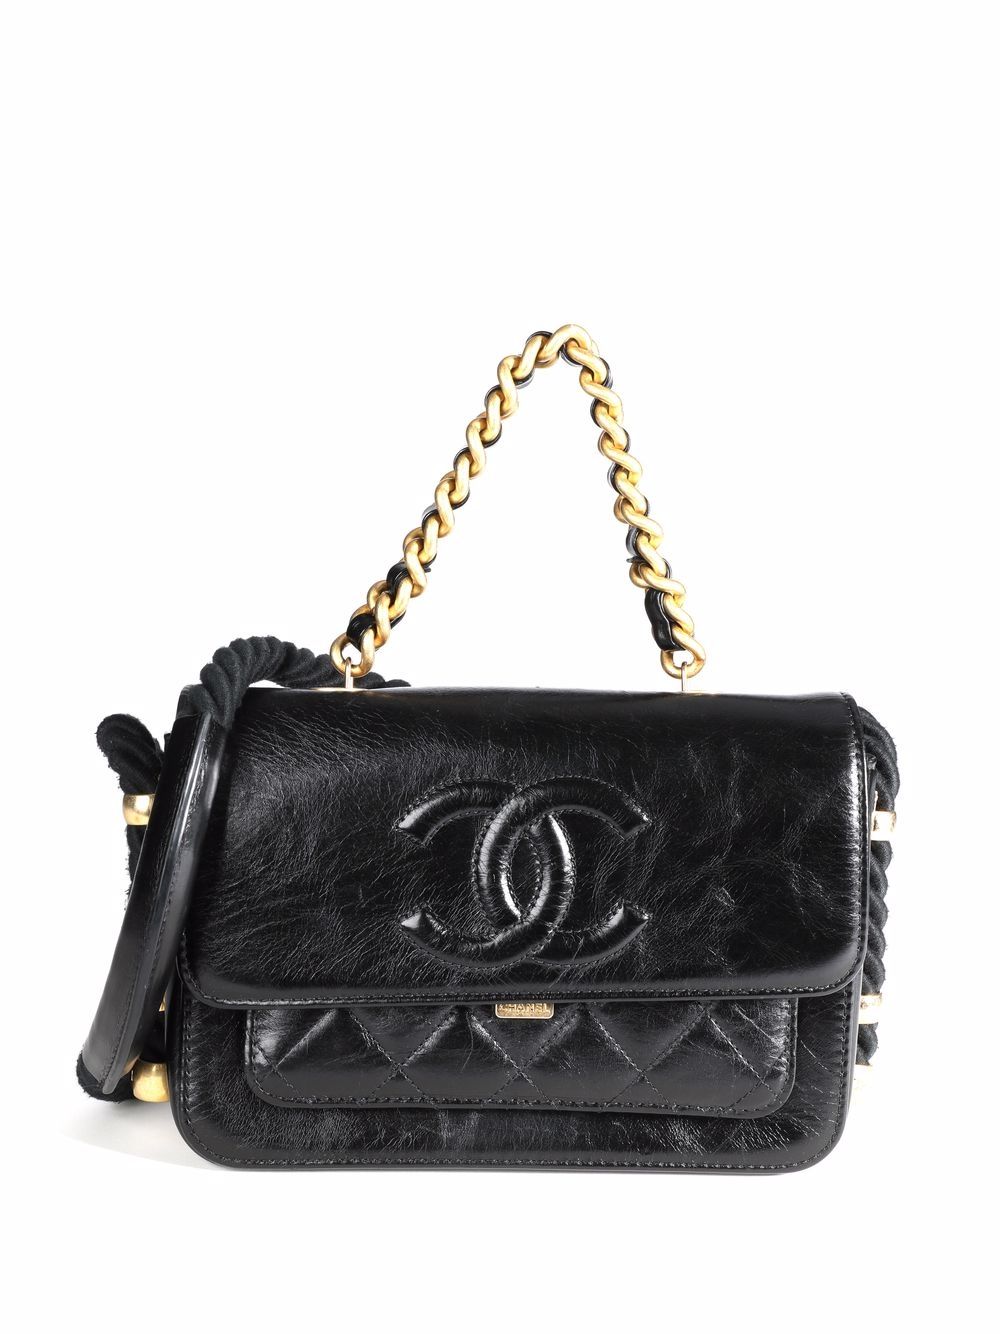 Chanel Pre-owned 2019 Limited Edition CC Shoulder Bag - Blue